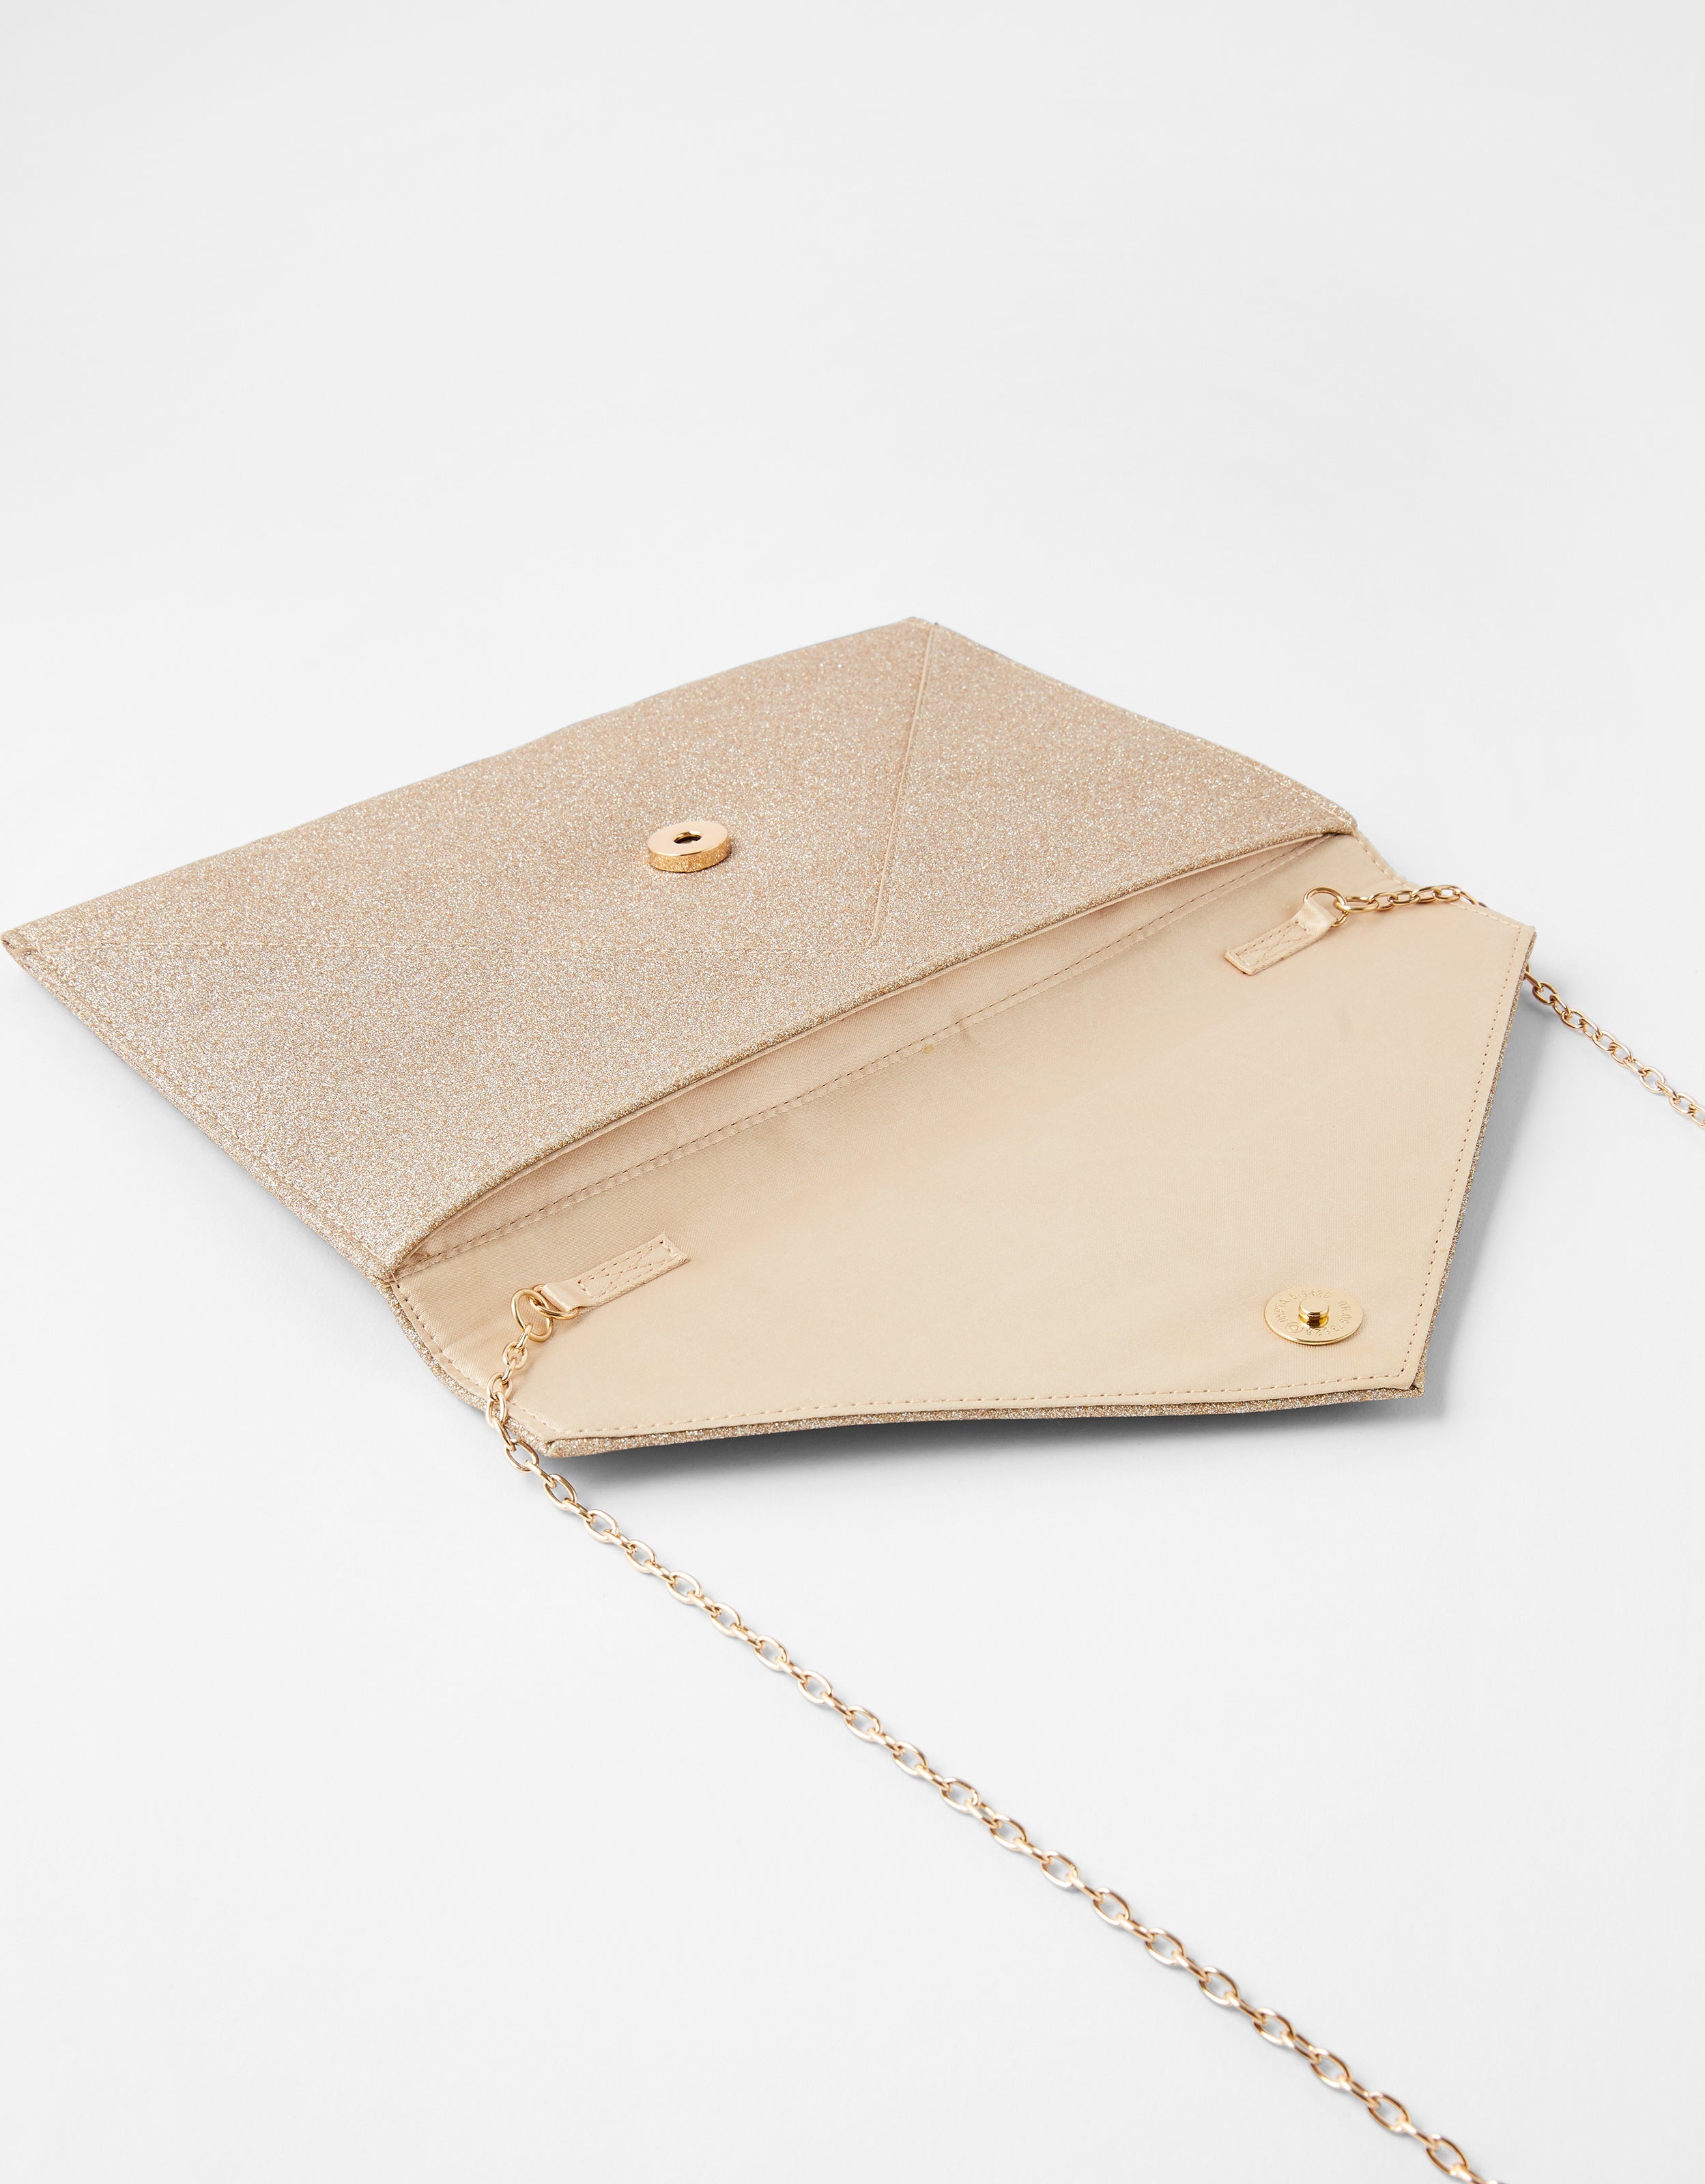 Party Clutch Bag for Women Ladies | Detachable Chain Sling Strap | Ladies Purse  Wallet |